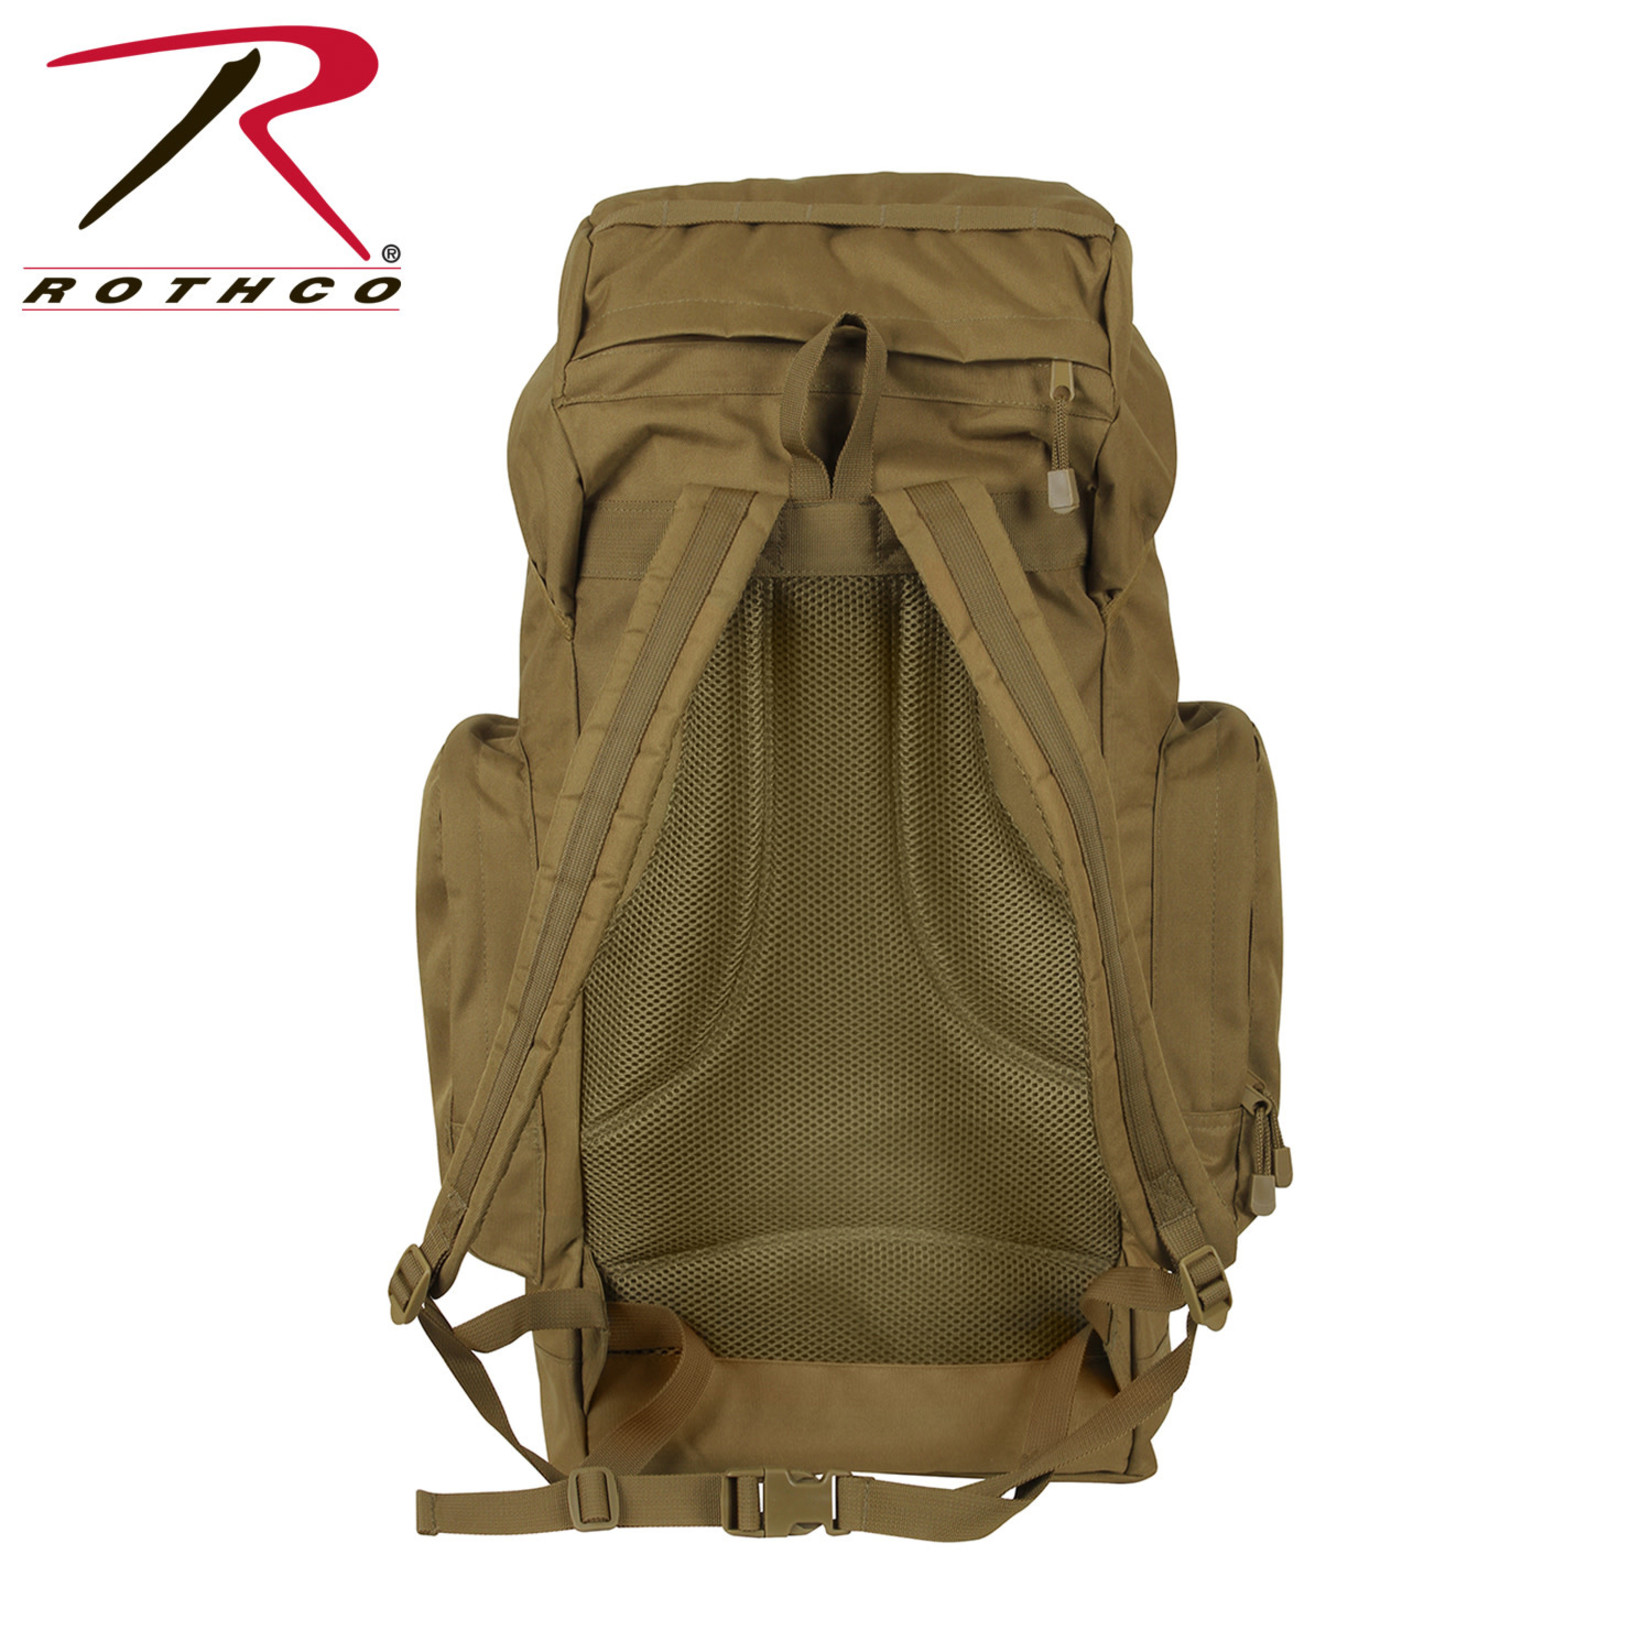 Rothco Rothco 45L Tactical Backpack